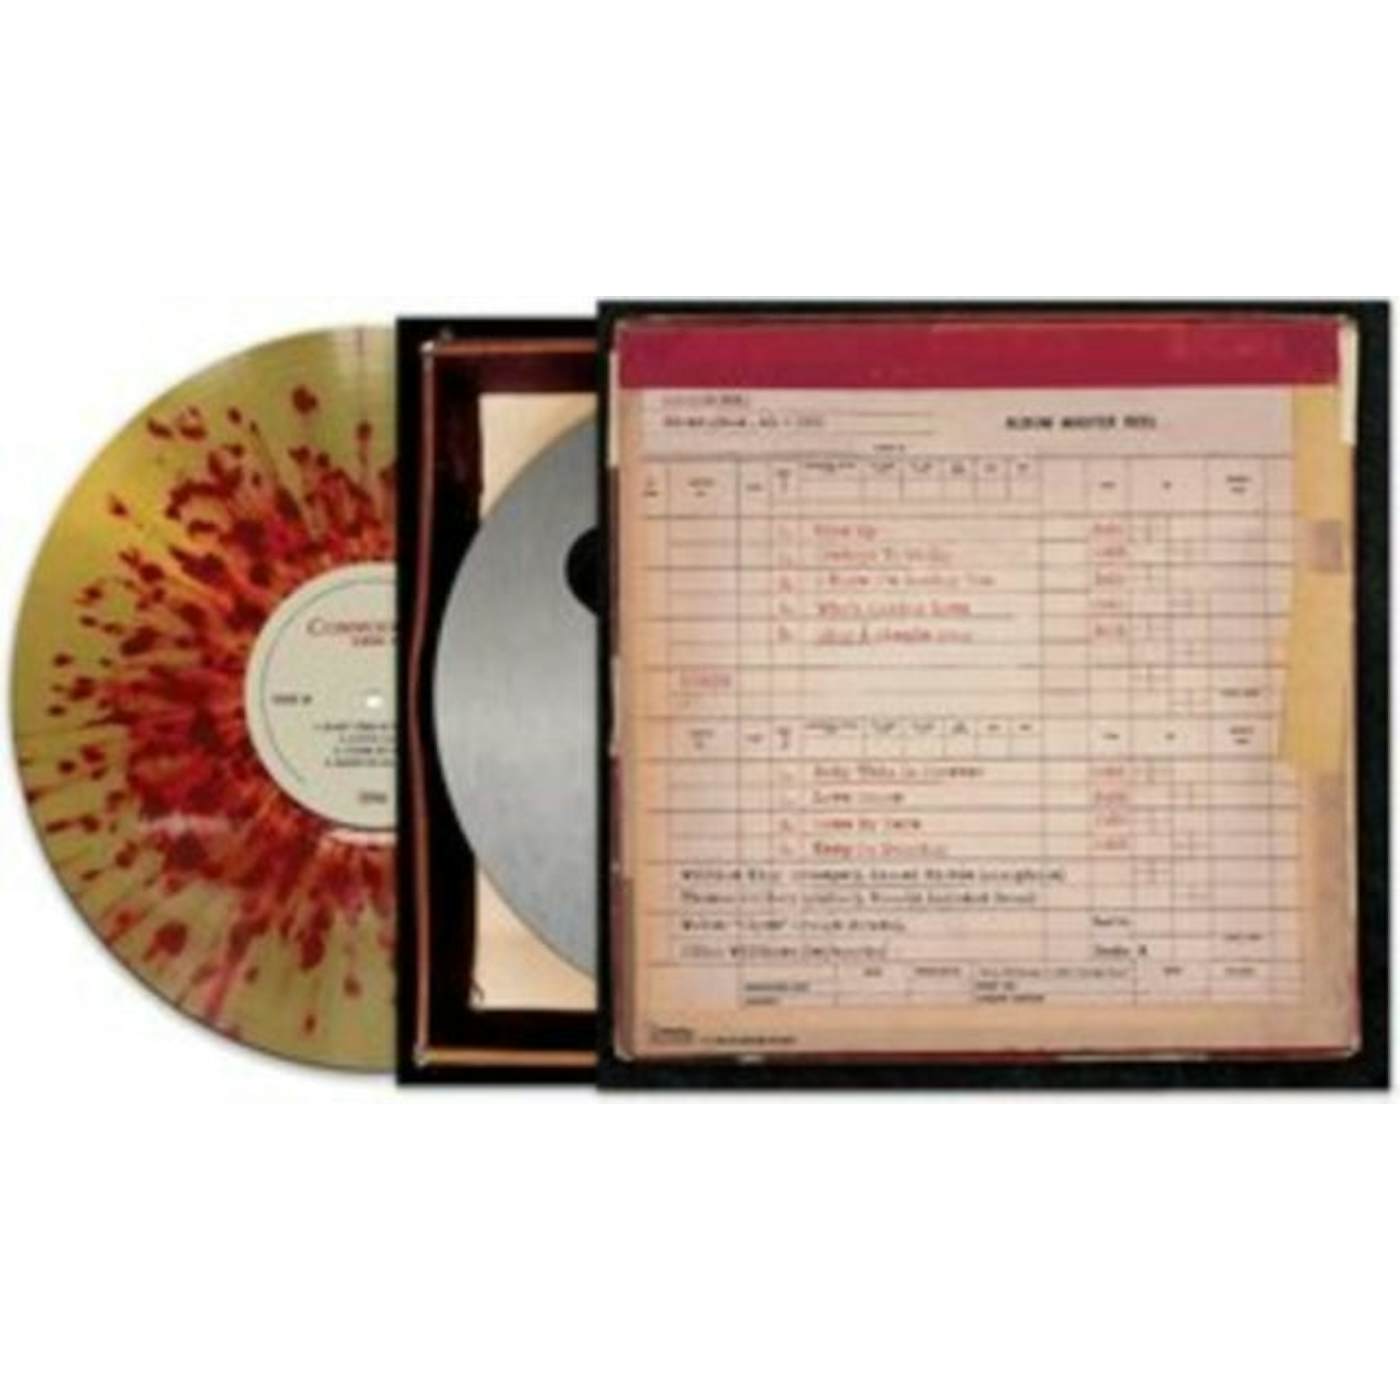 Commodores LP - Alabama 69 (Vinyl)